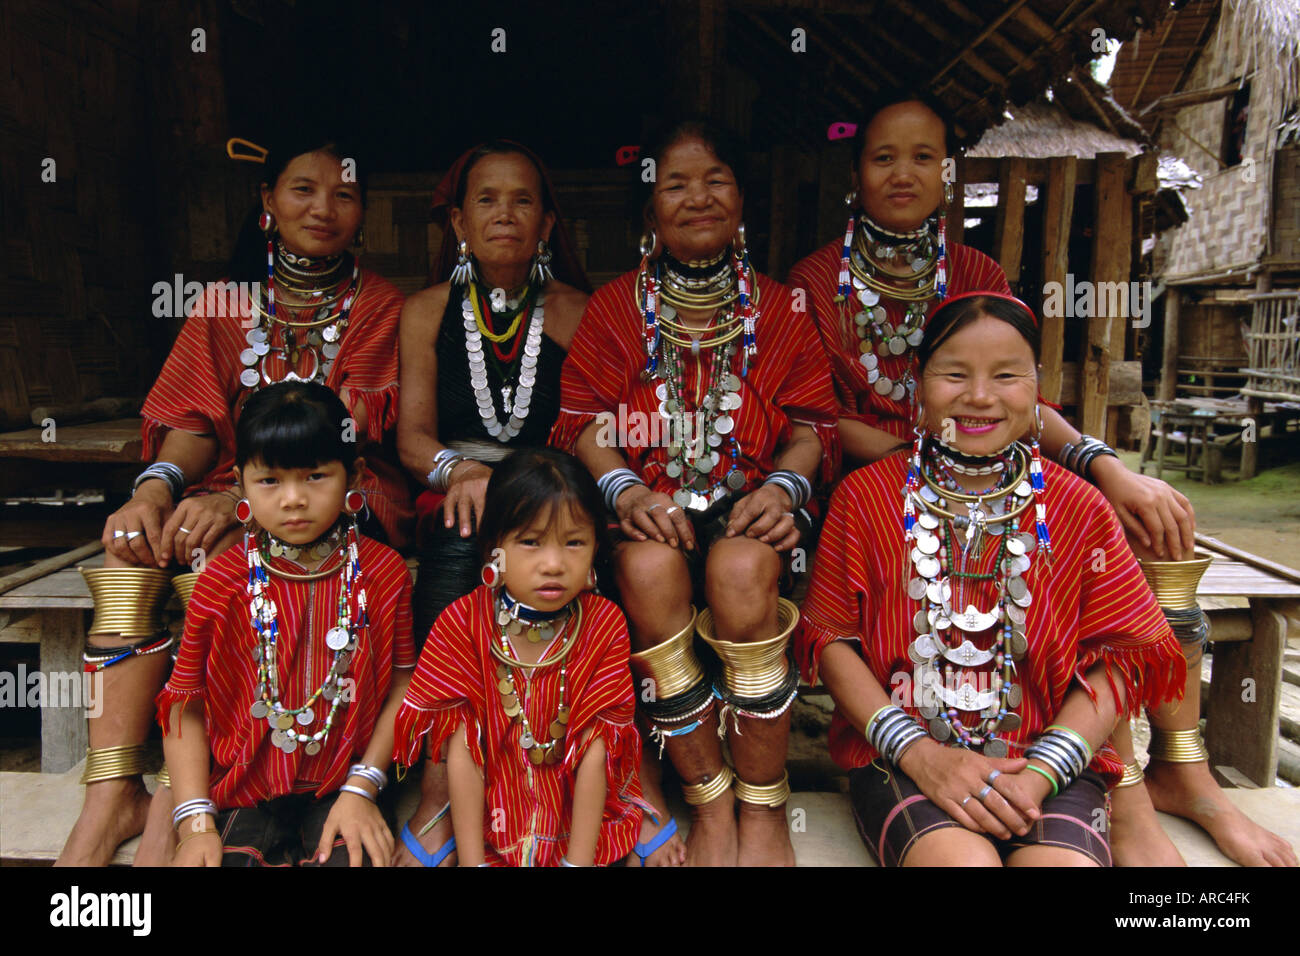 Big ears' Padaung tribe villagers in Nai Soi, Mae Hong Son Province, Thailand, Asia Stock Photo